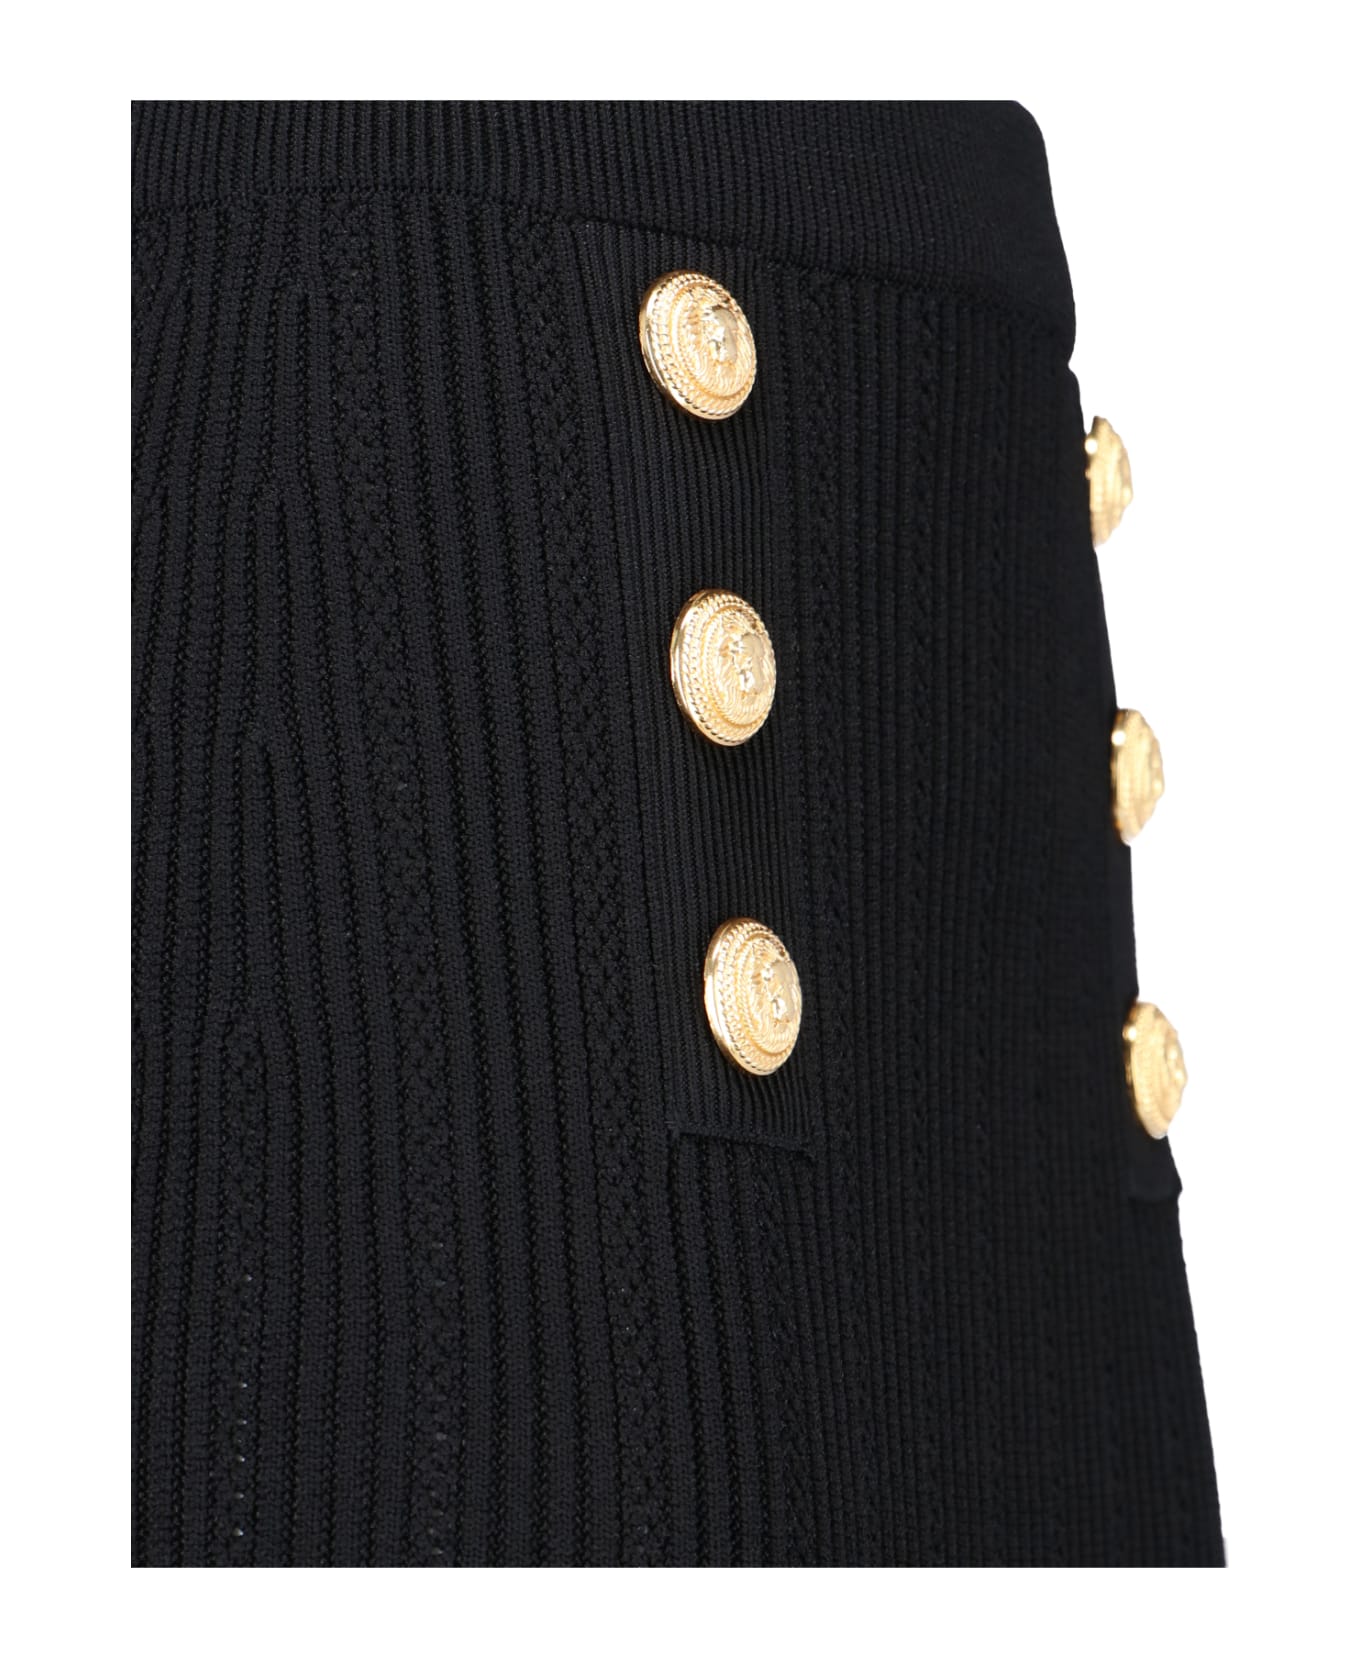 Balmain Buttoned Knit Midi Skirt - Black